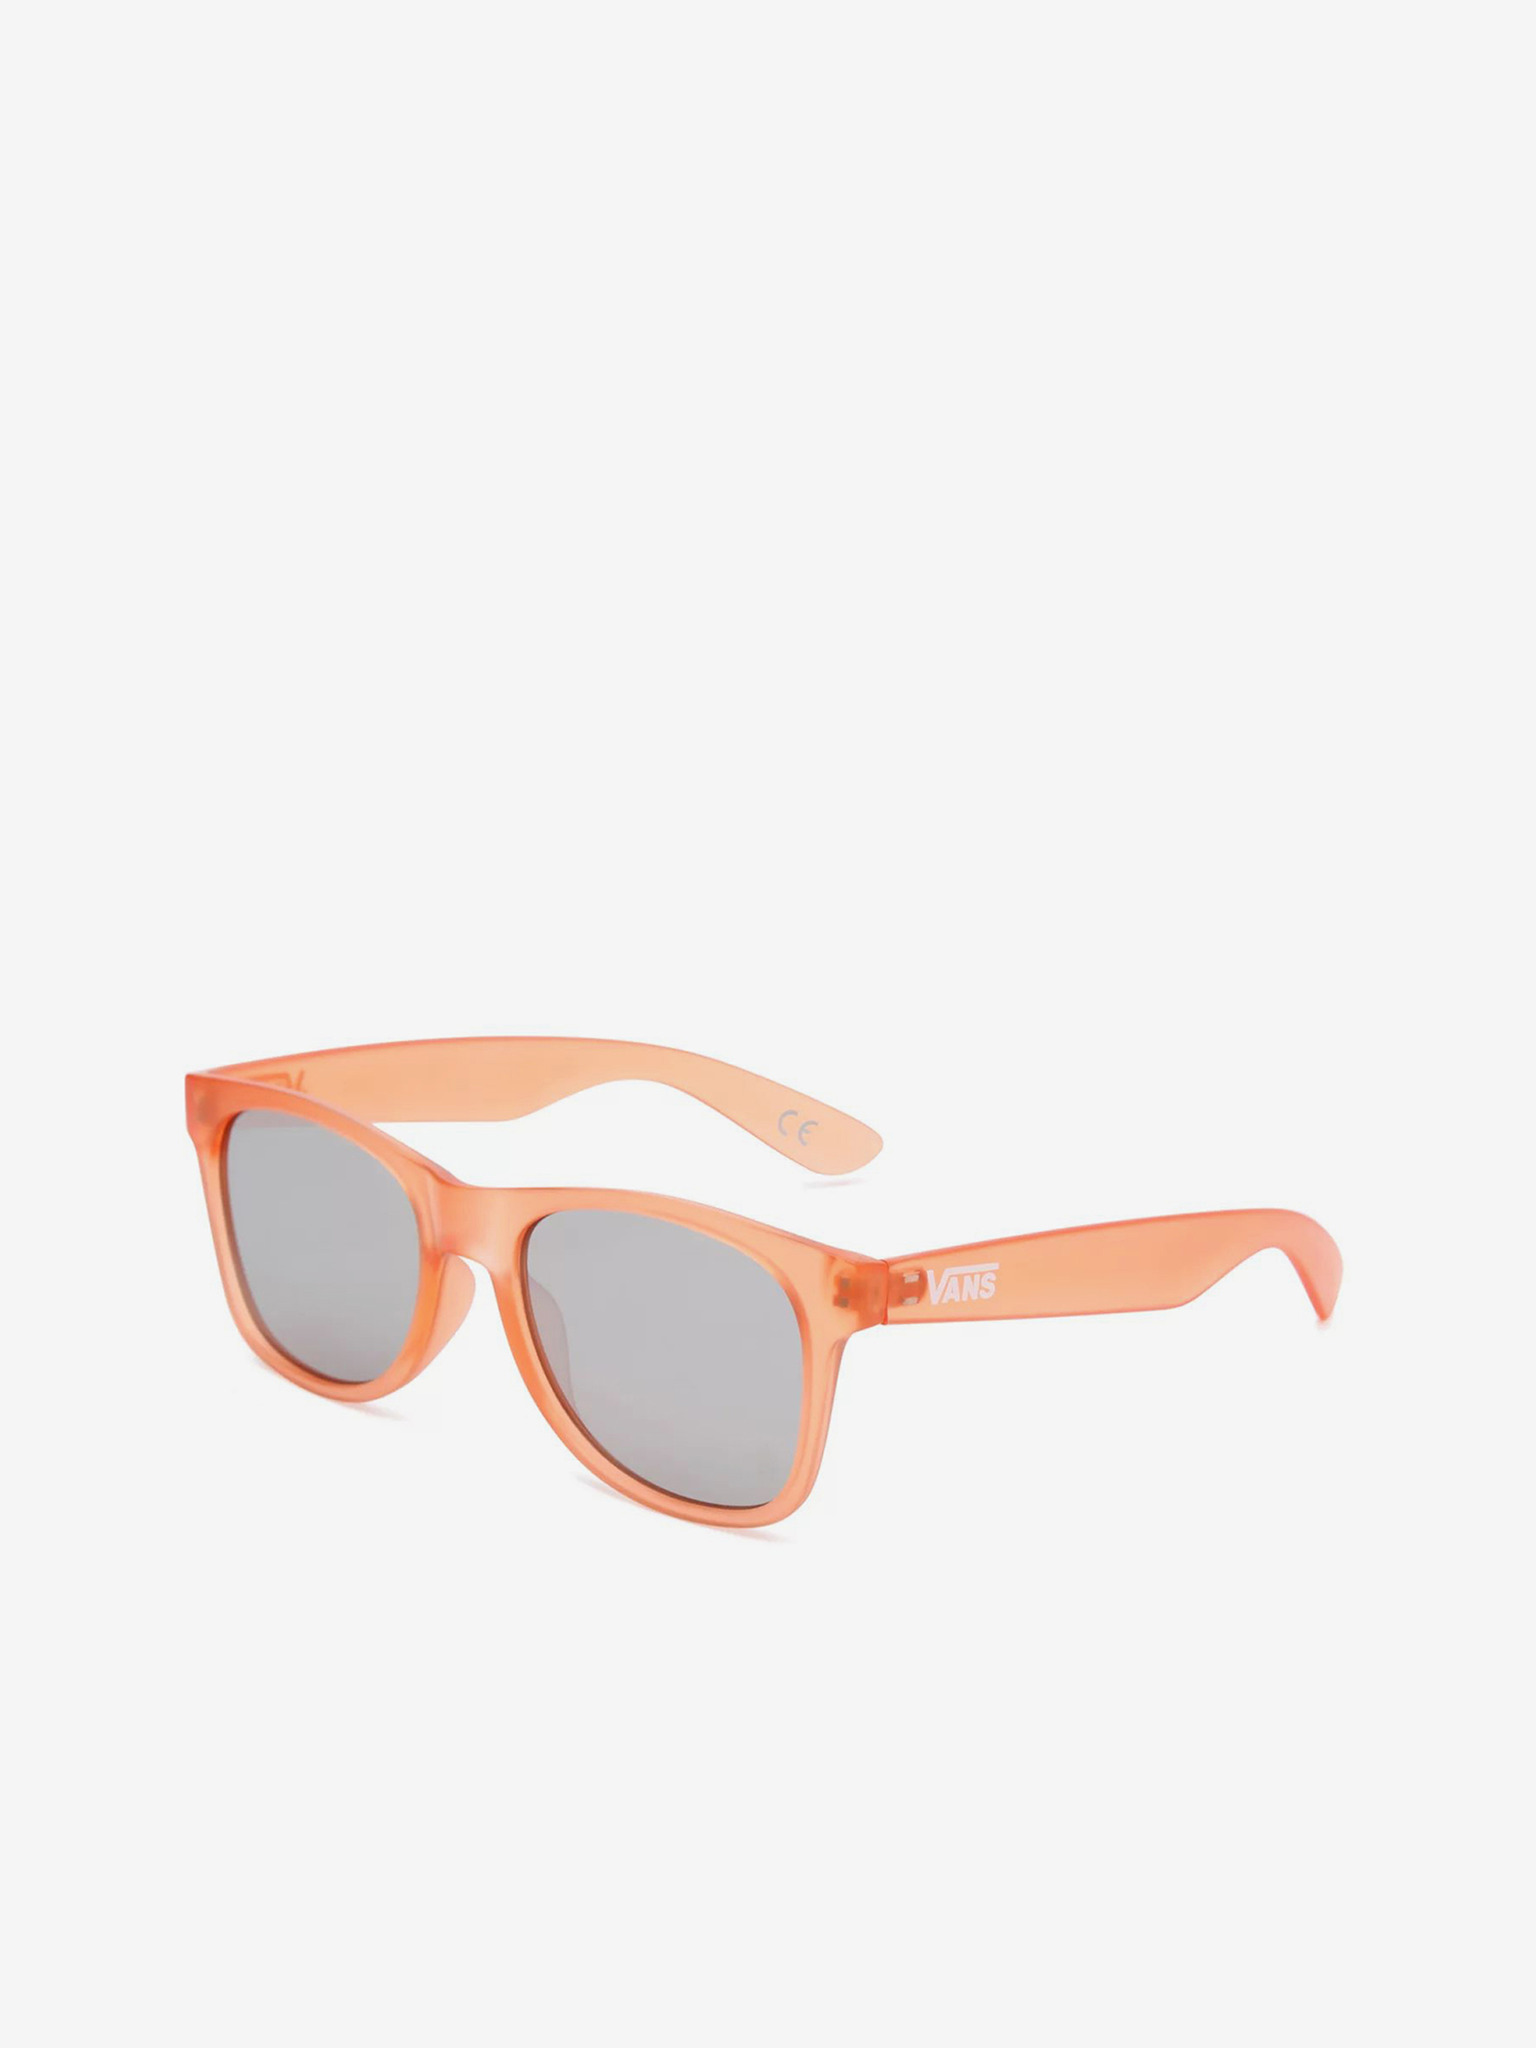 Spicoli Vans Flat Sunglasses Shades -